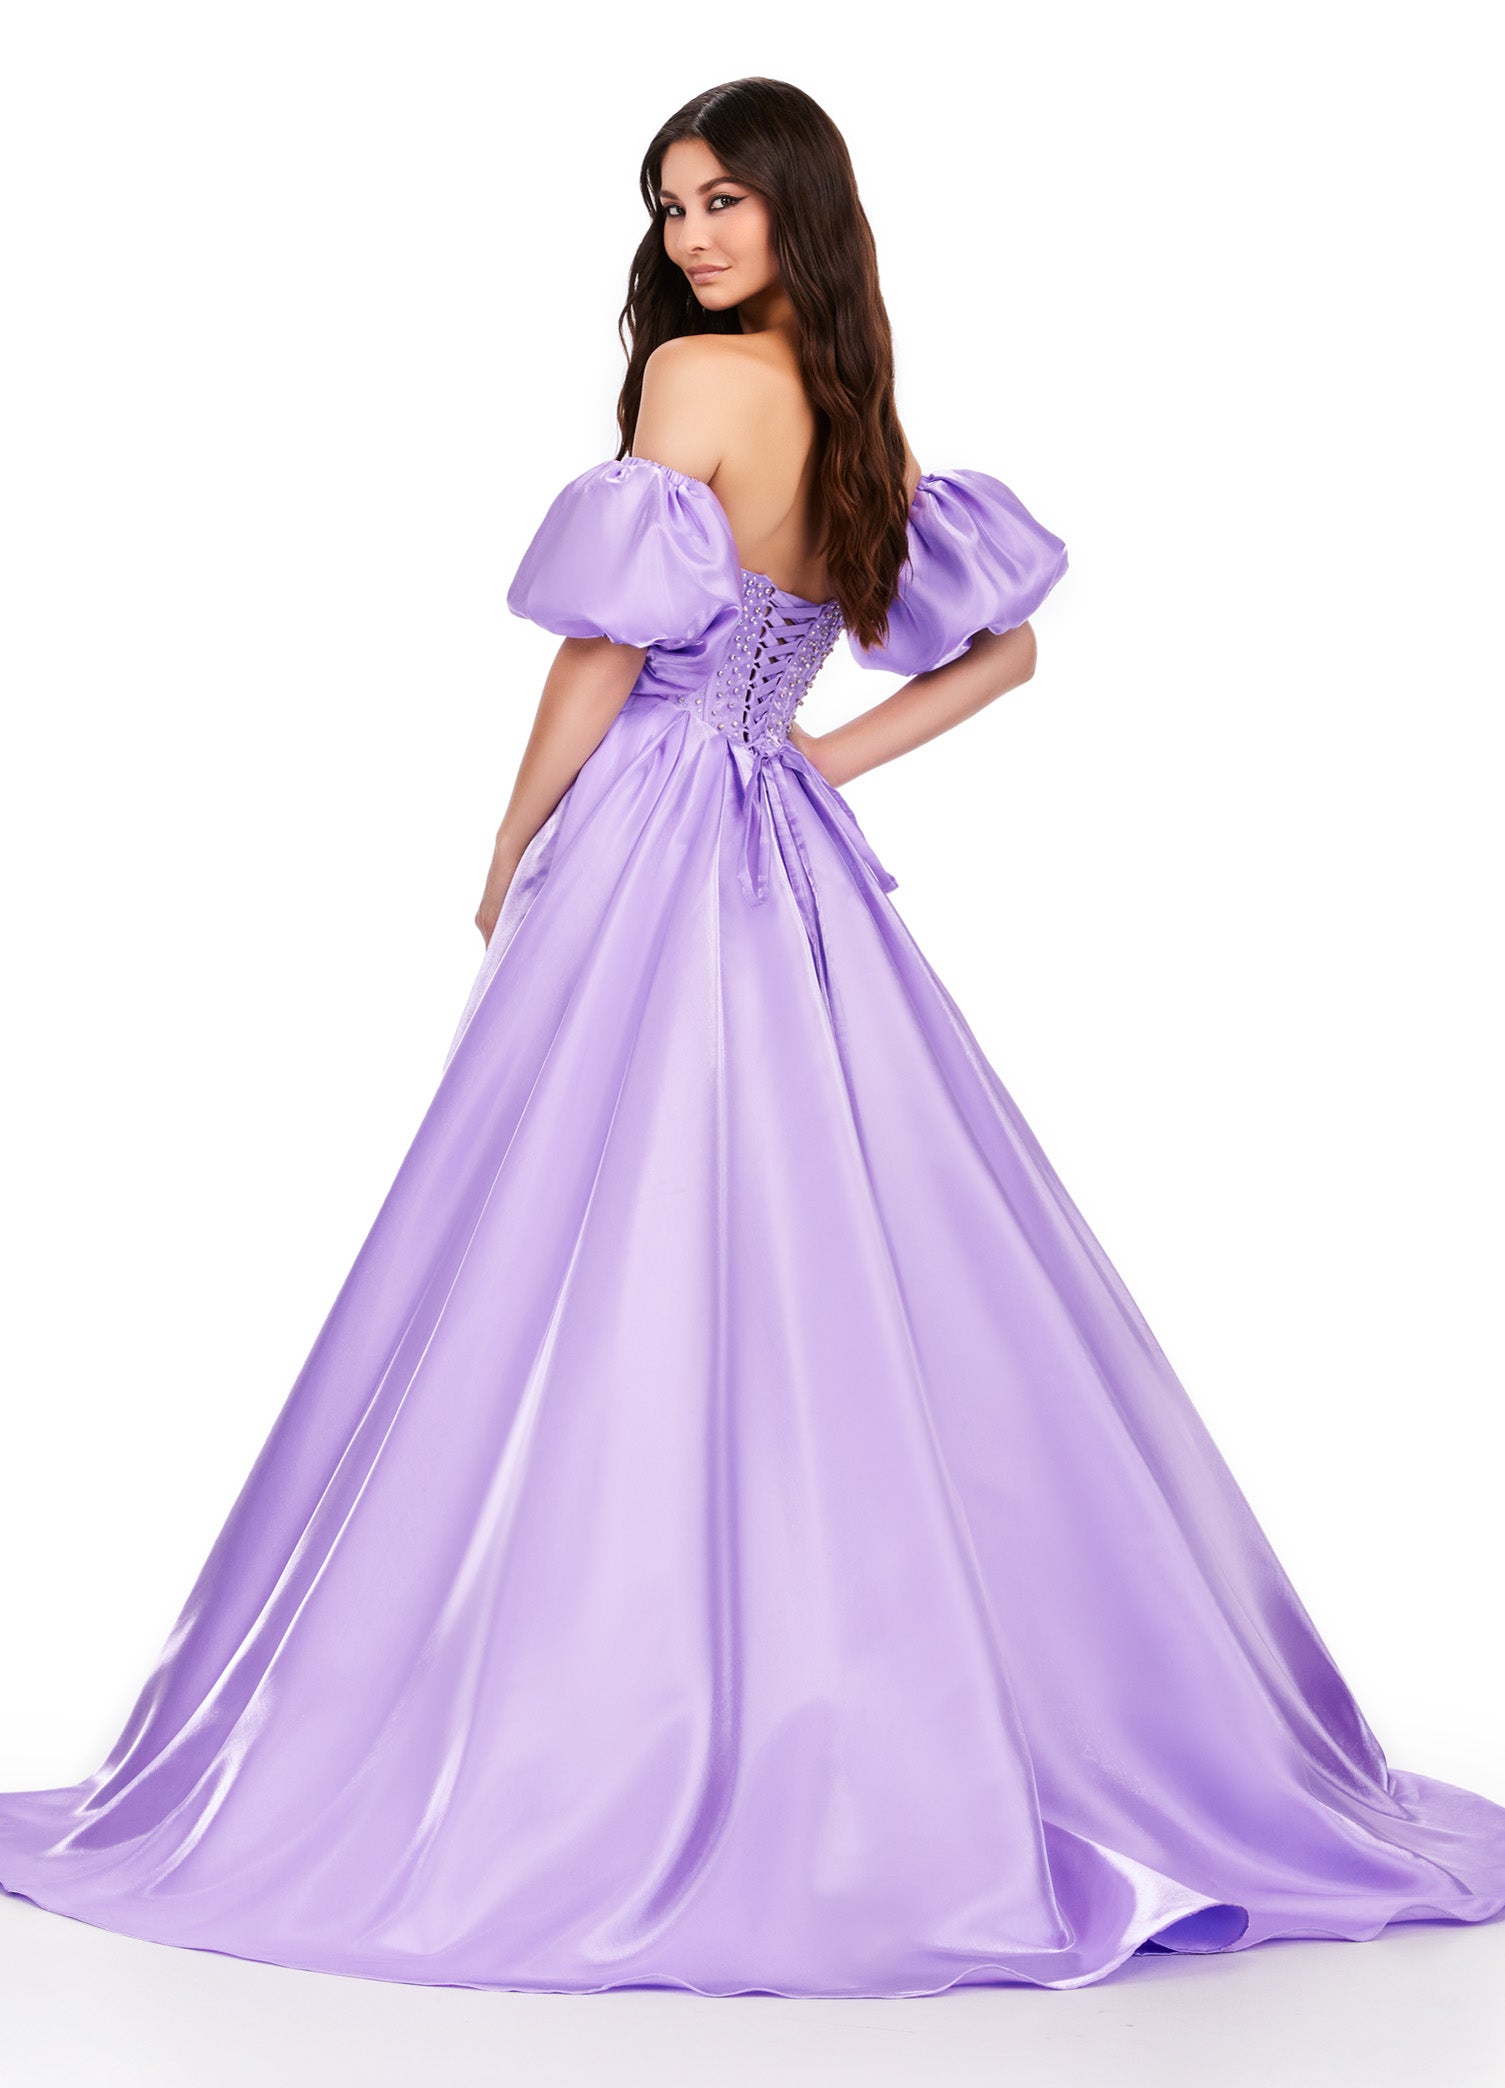 Ashley Lauren 11642 Satin A Line Crystal Corset Prom Dress Puff Sleeve  Ballgown Pageant